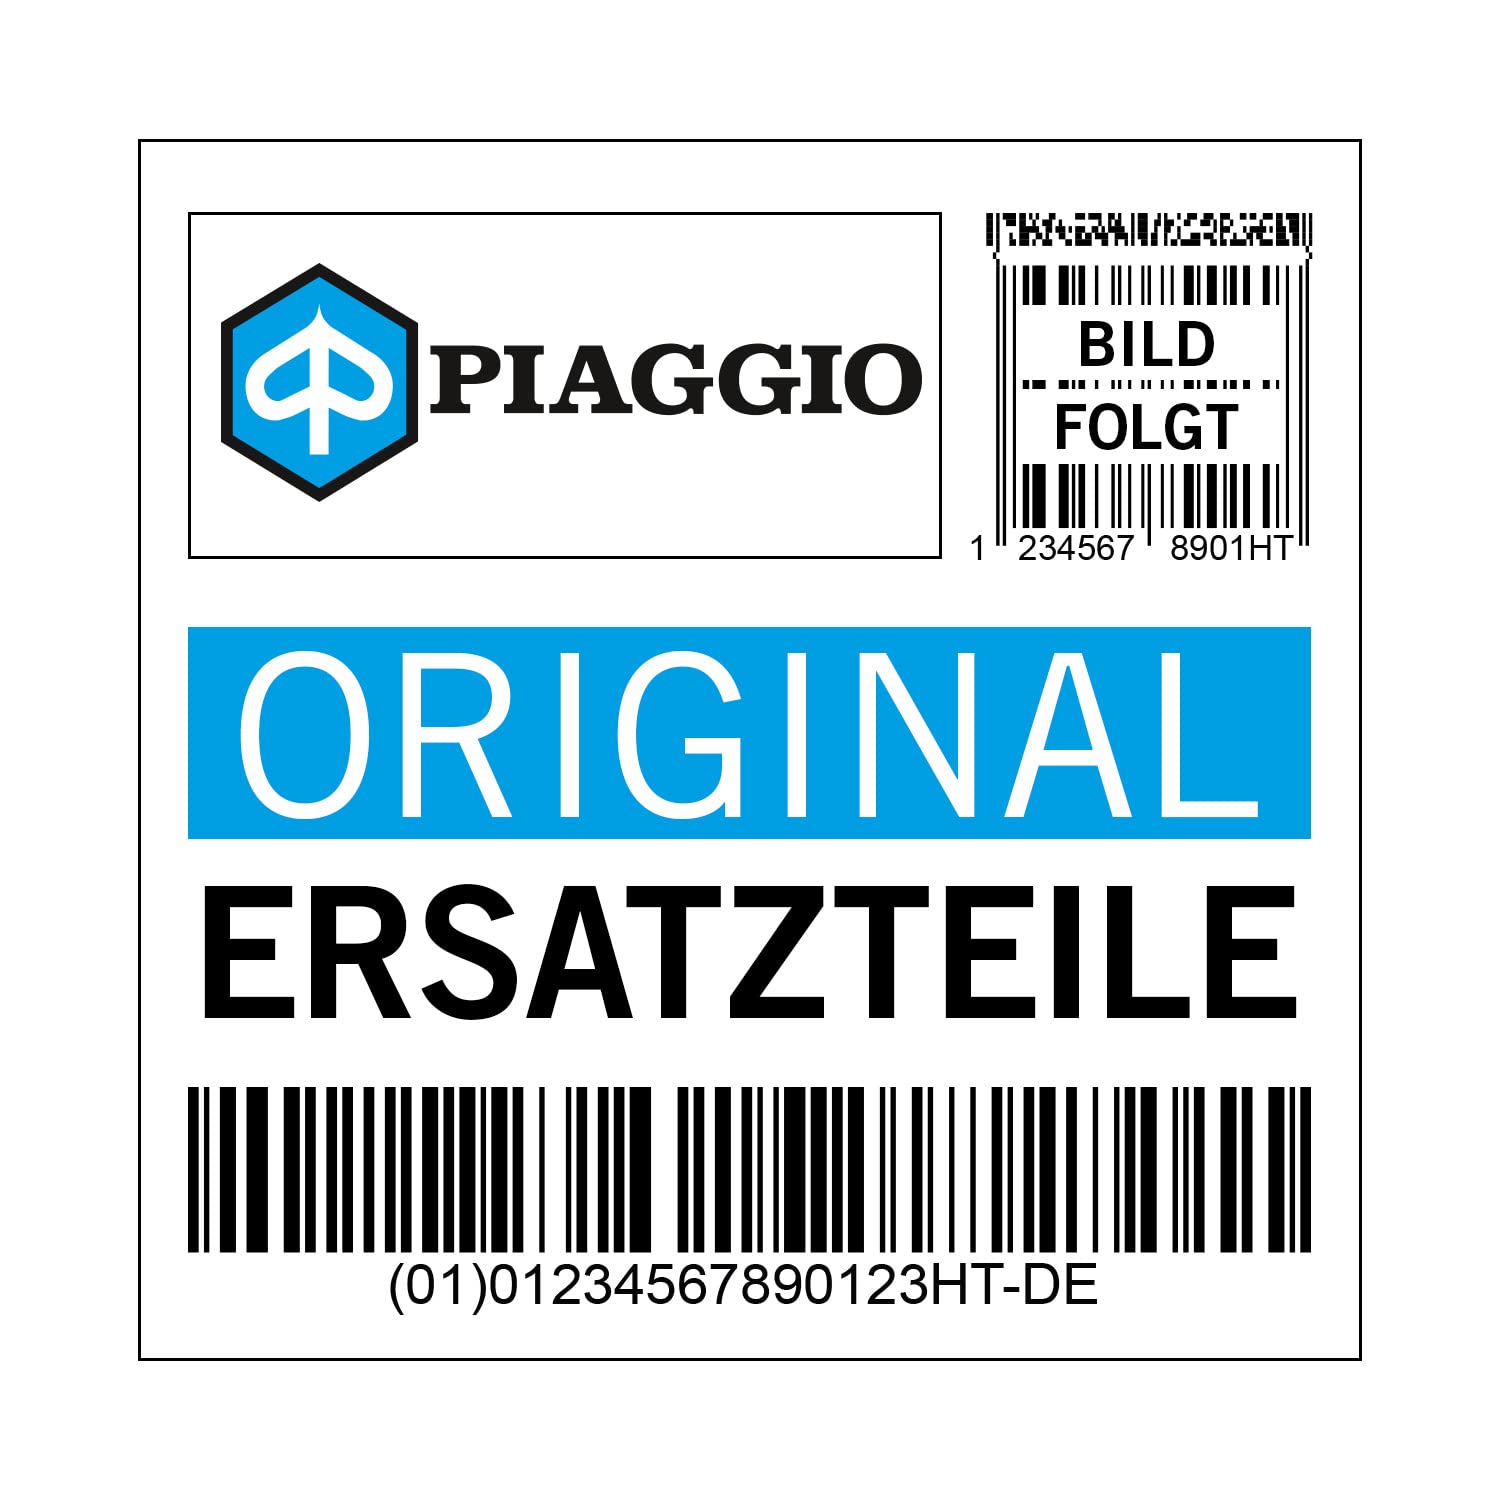 Dekor Piaggio Emblem, Ape Calessino, 658517 von Maxtuned